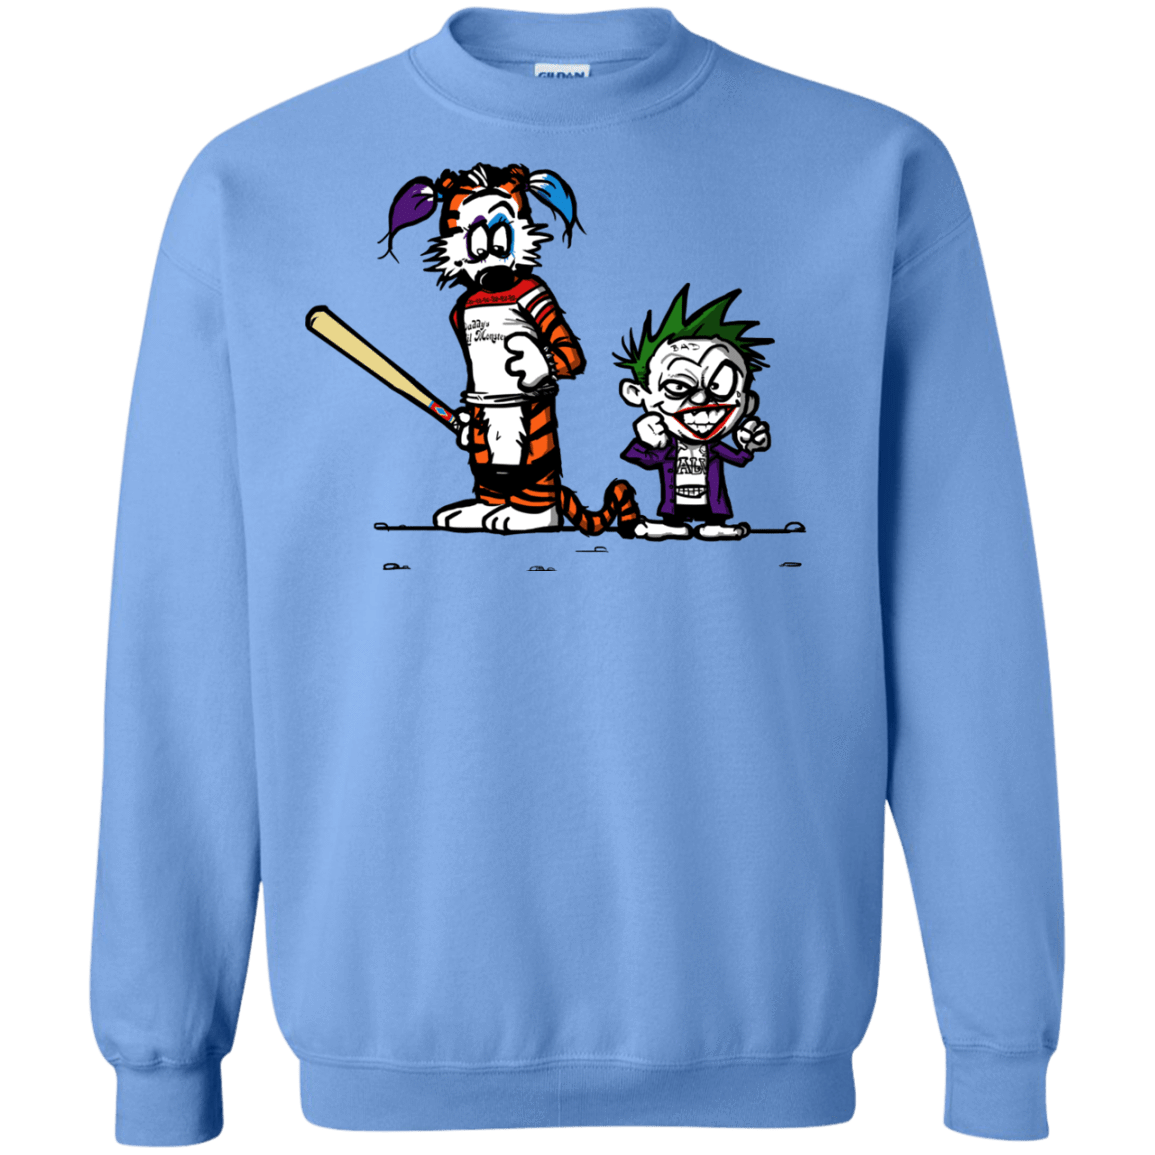 Sweatshirts Carolina Blue / Small Suicide Tandem Crewneck Sweatshirt